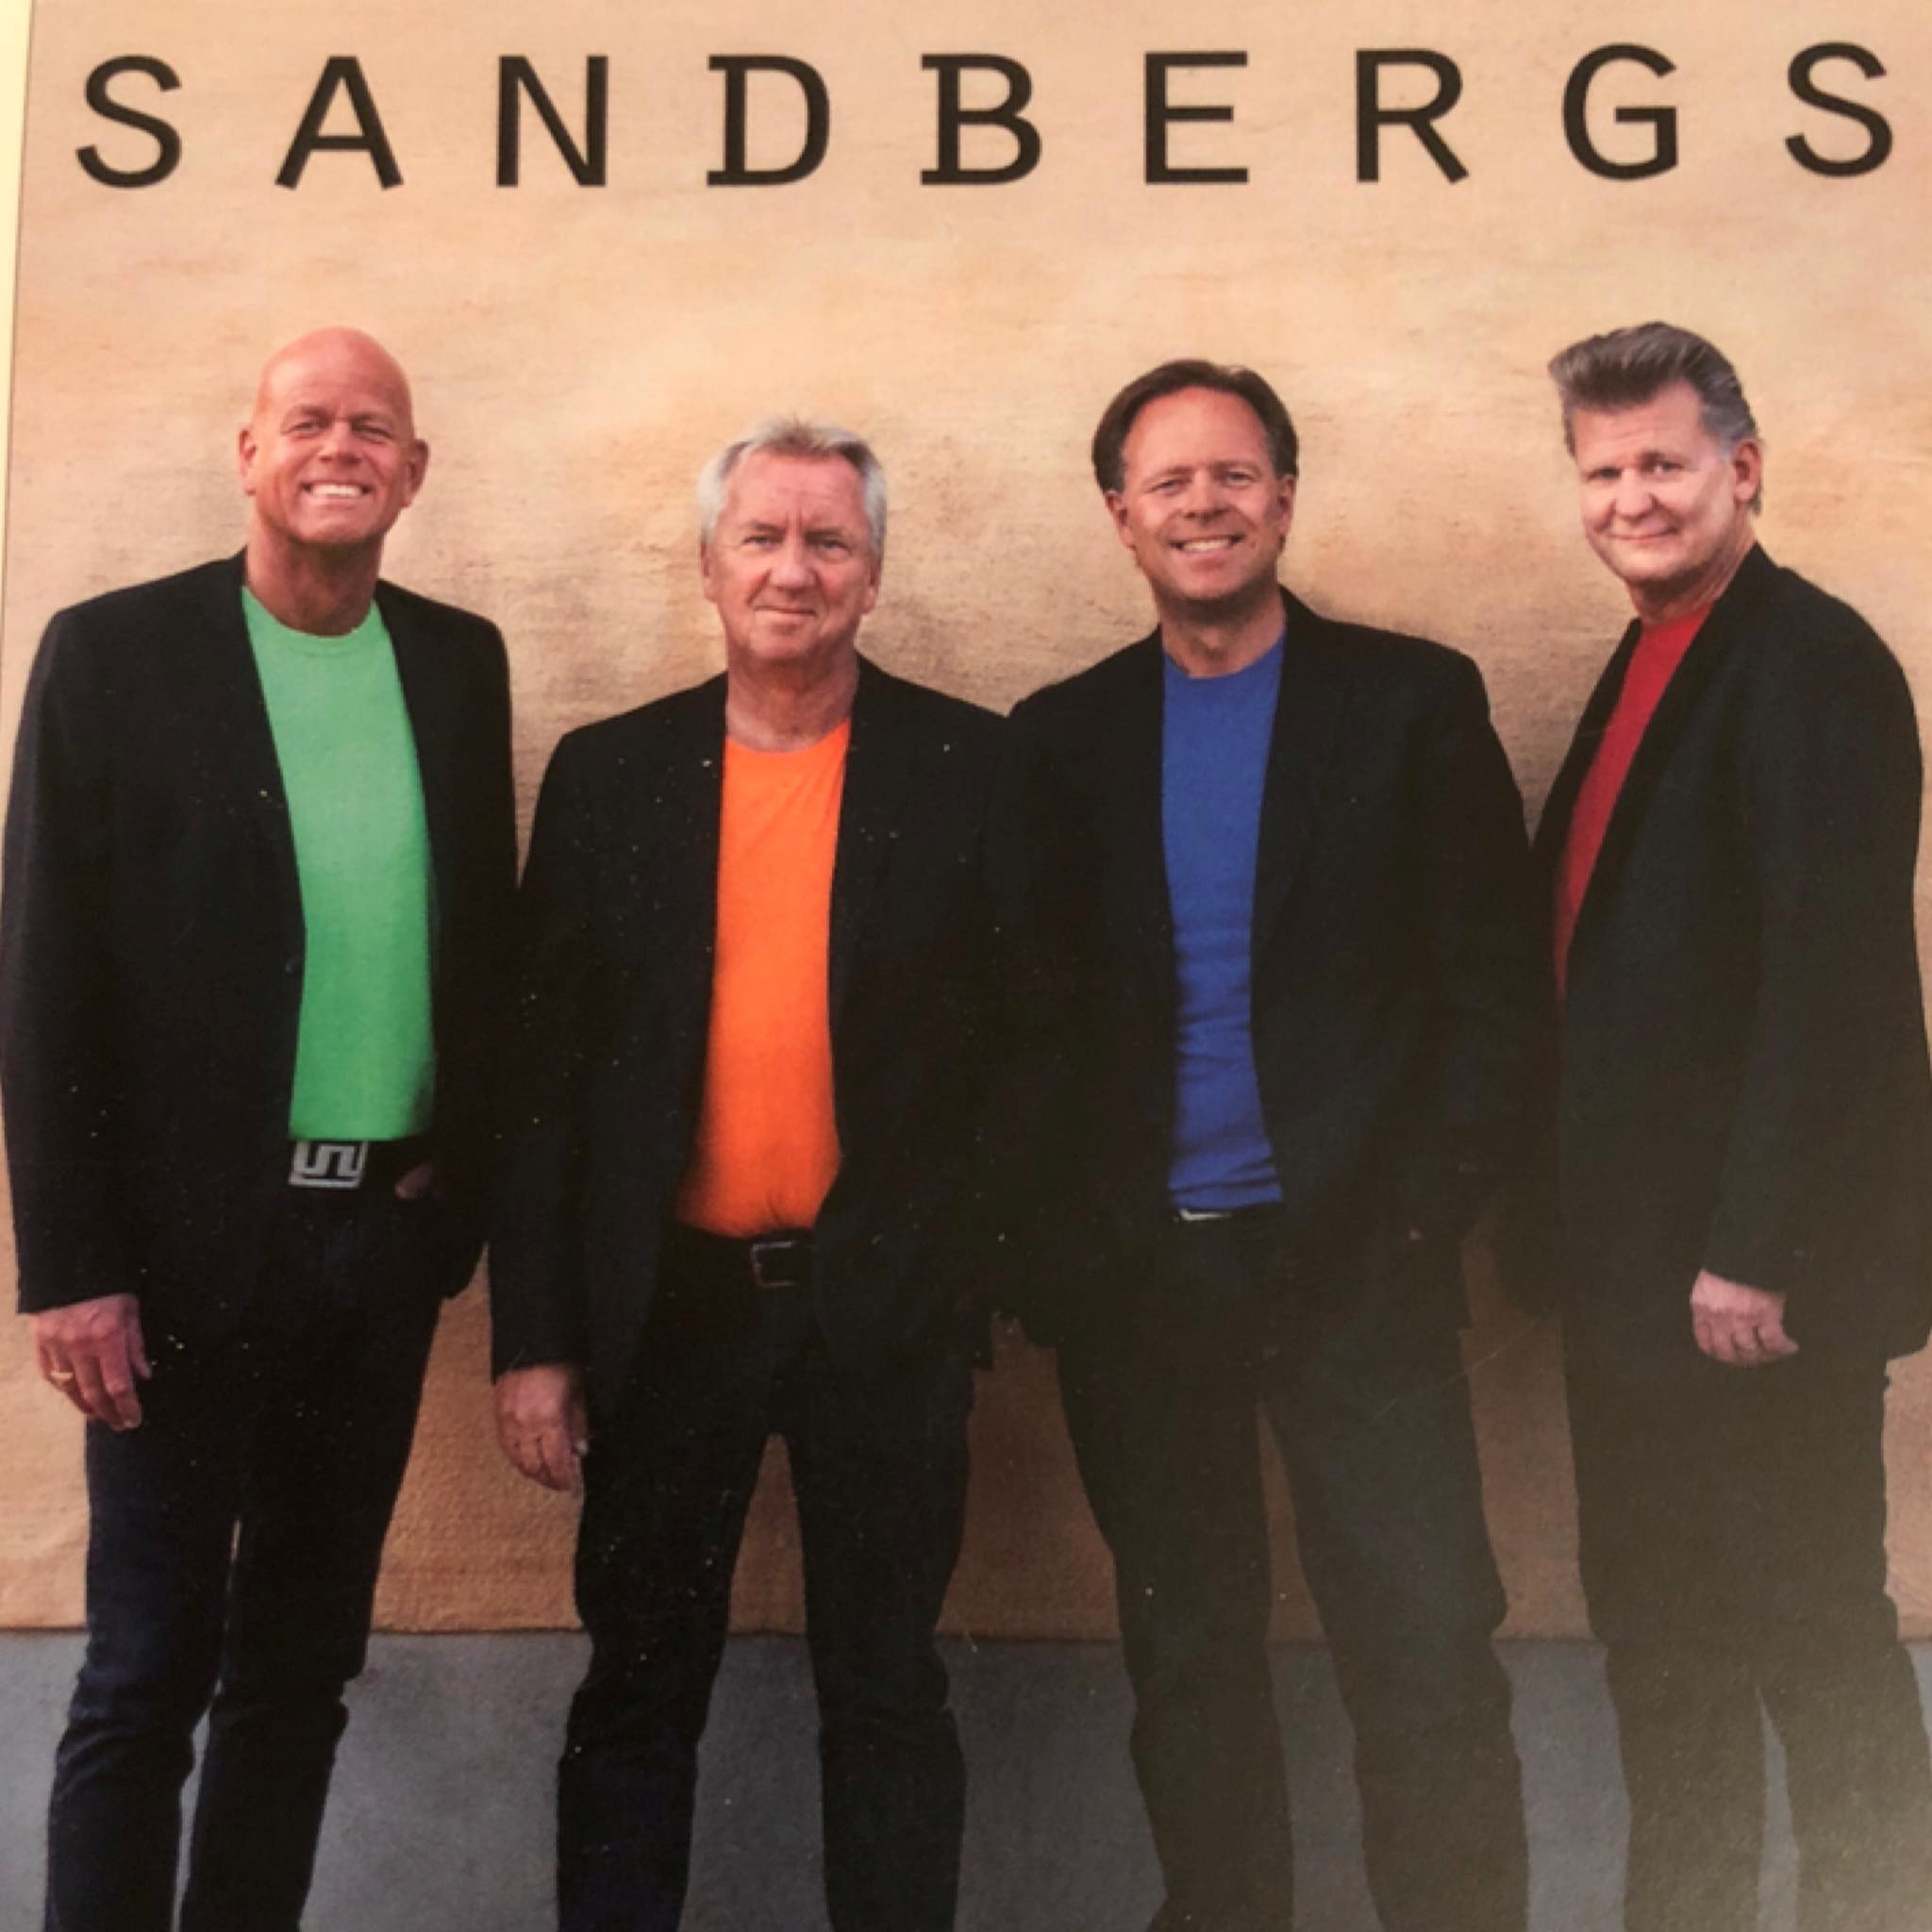 Sandbergs